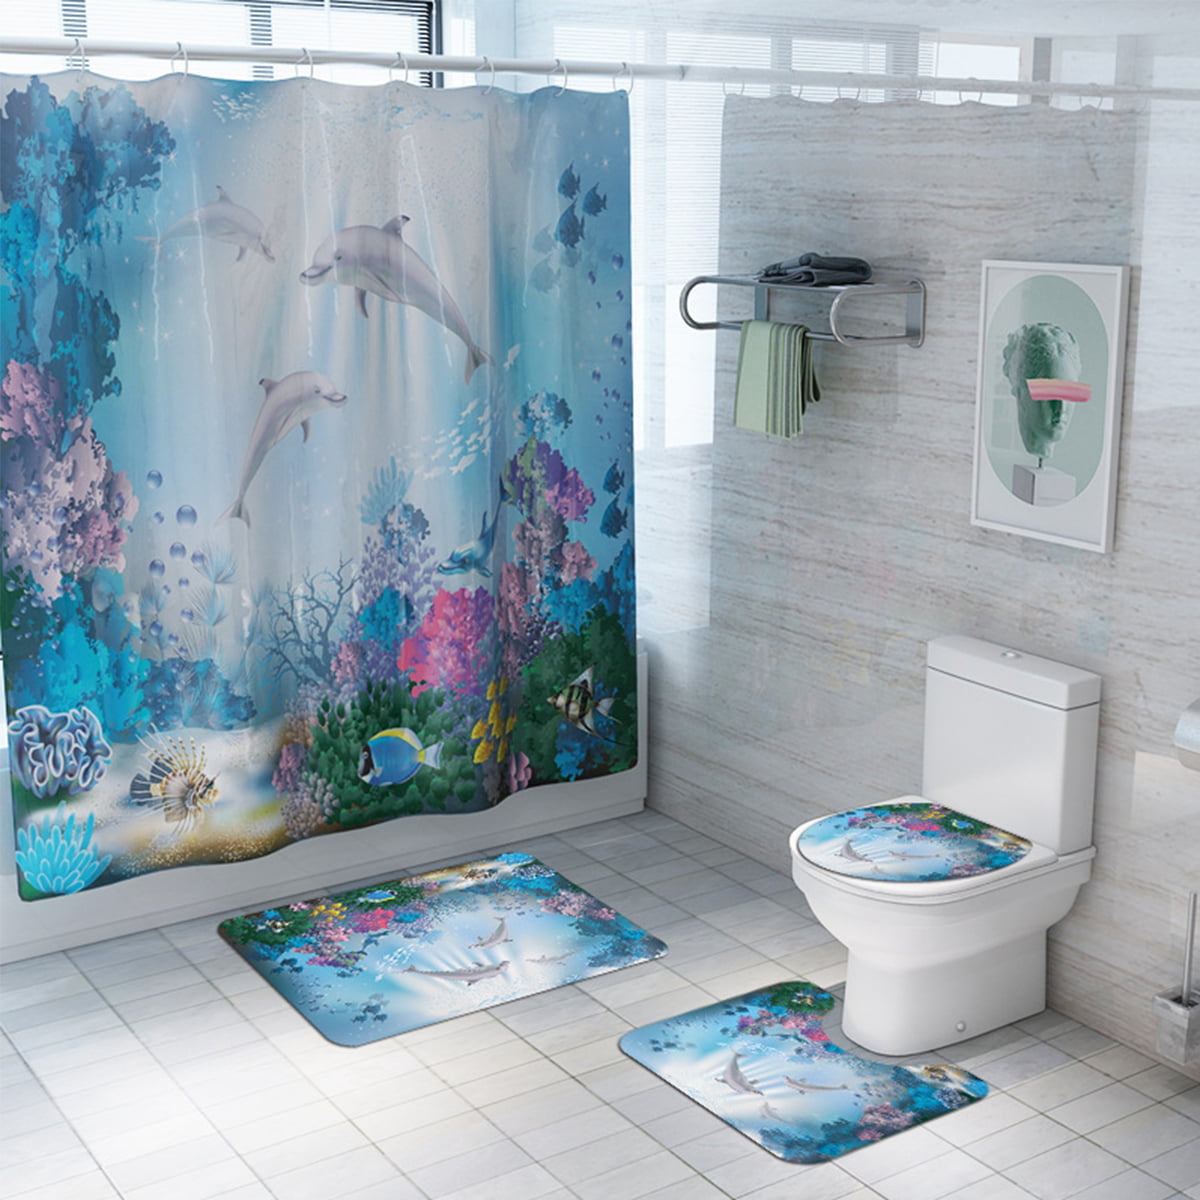 Super Mario 4PCS Non-Slip Bathroom Rugs Set Shower Curtain Toilet Lid Cover Gift 